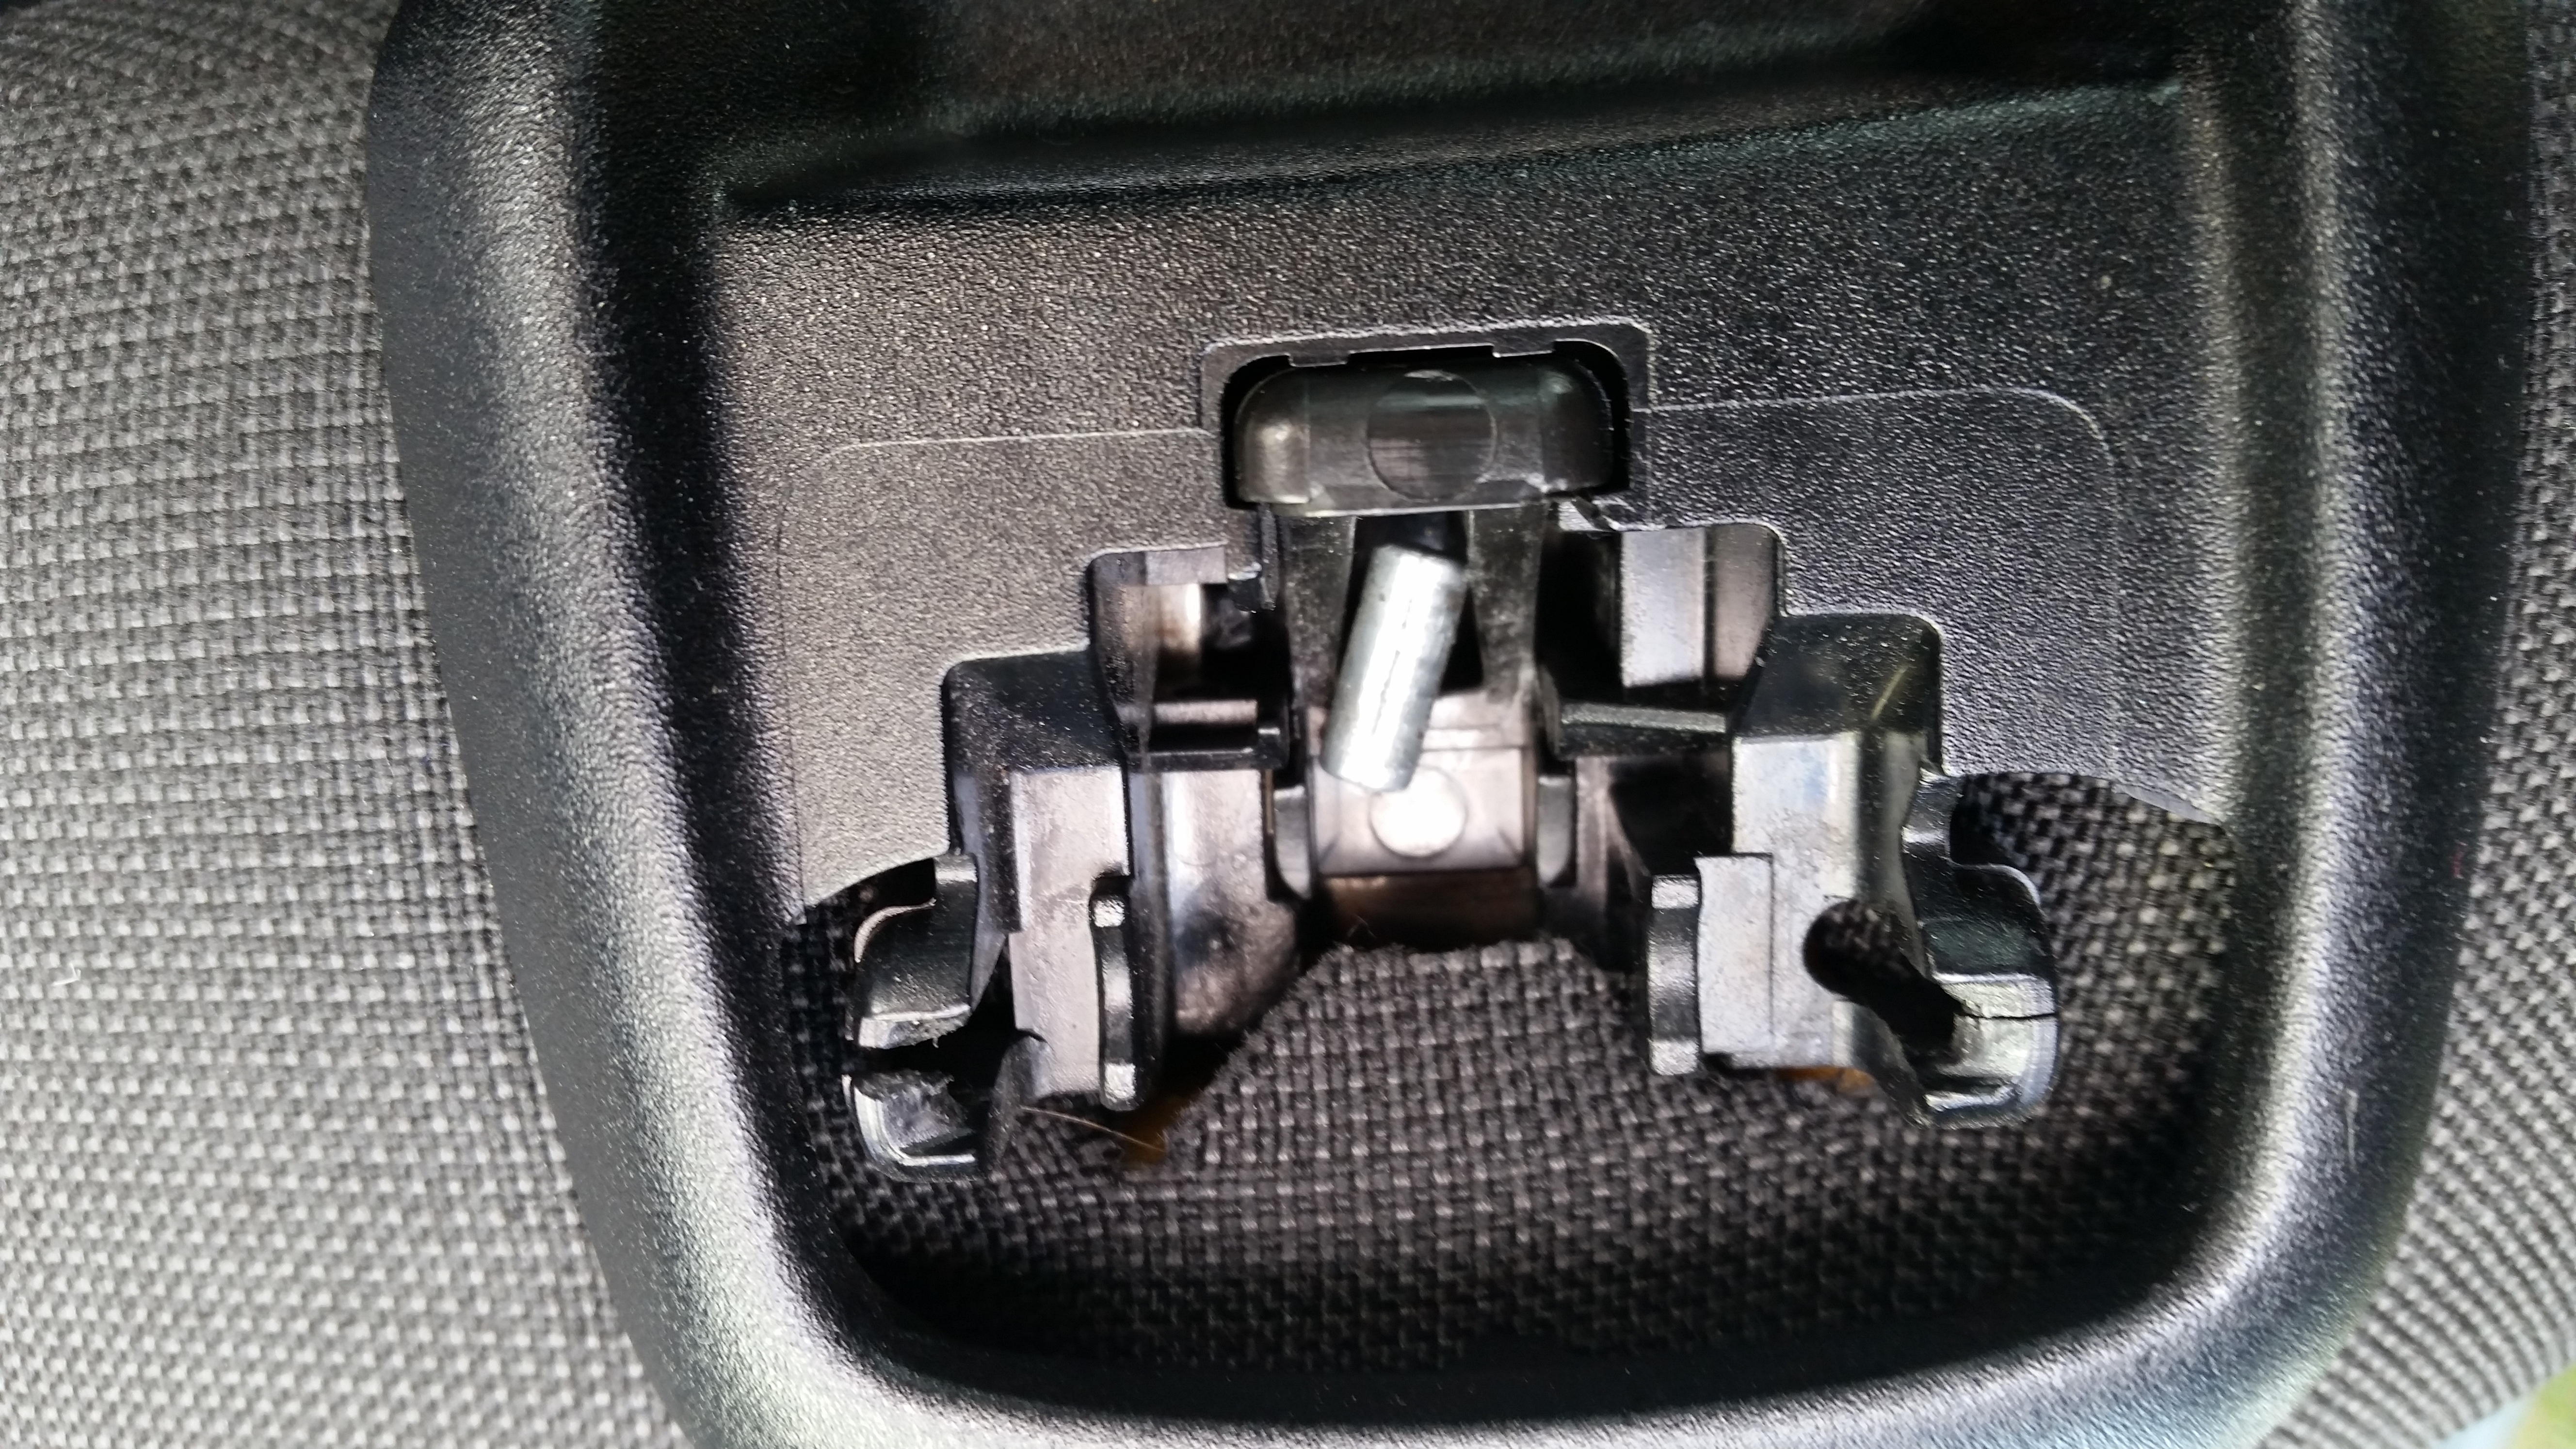 Fiesta Mk6 driver's seat tilt handle broken Ford Fiesta